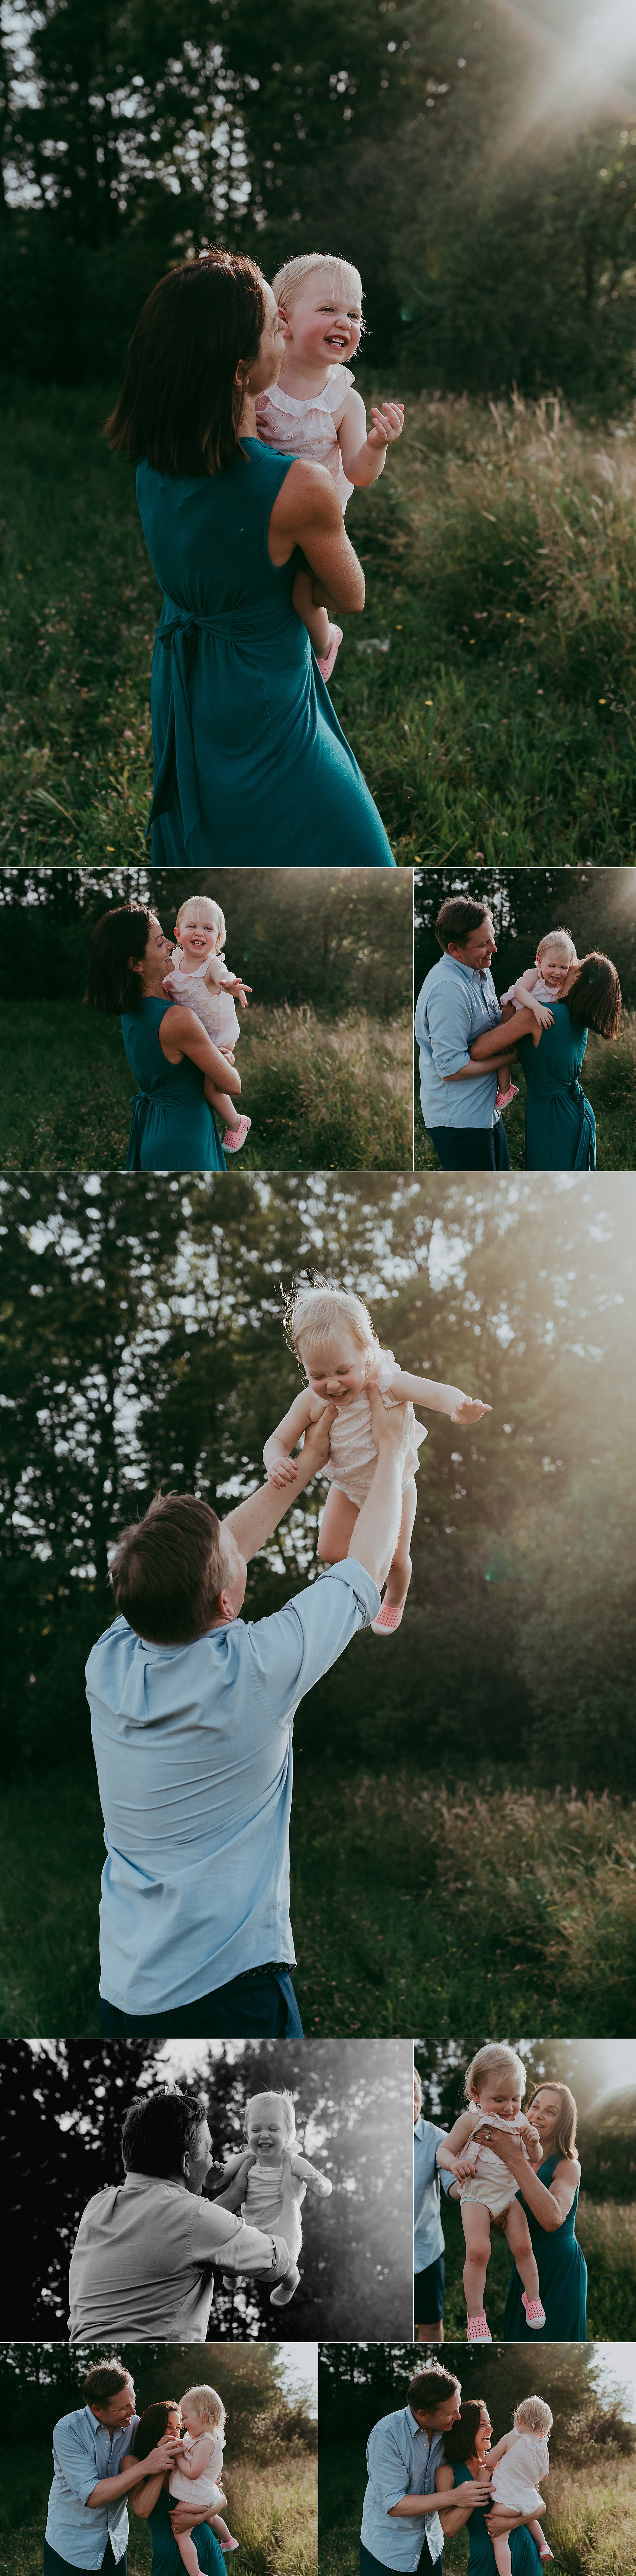 Handke Family | Cleveland Photographer